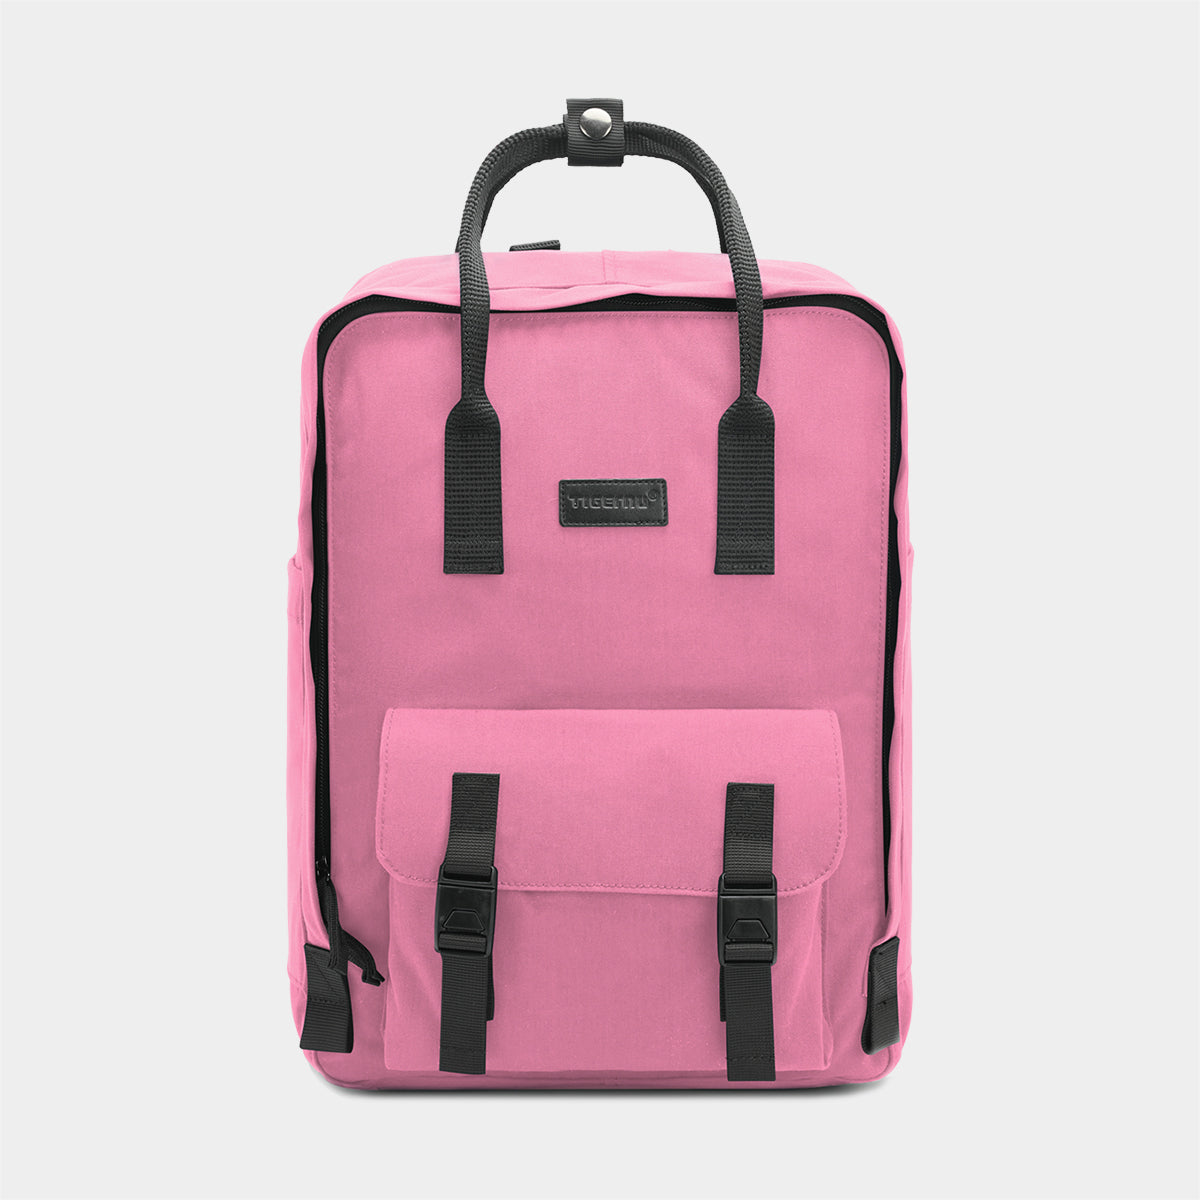 Tigernu Fashion Color Lightweight Women's Bag 14 inch Women's Bag Schoolbag Casual Women's Little Girl's Backpack New